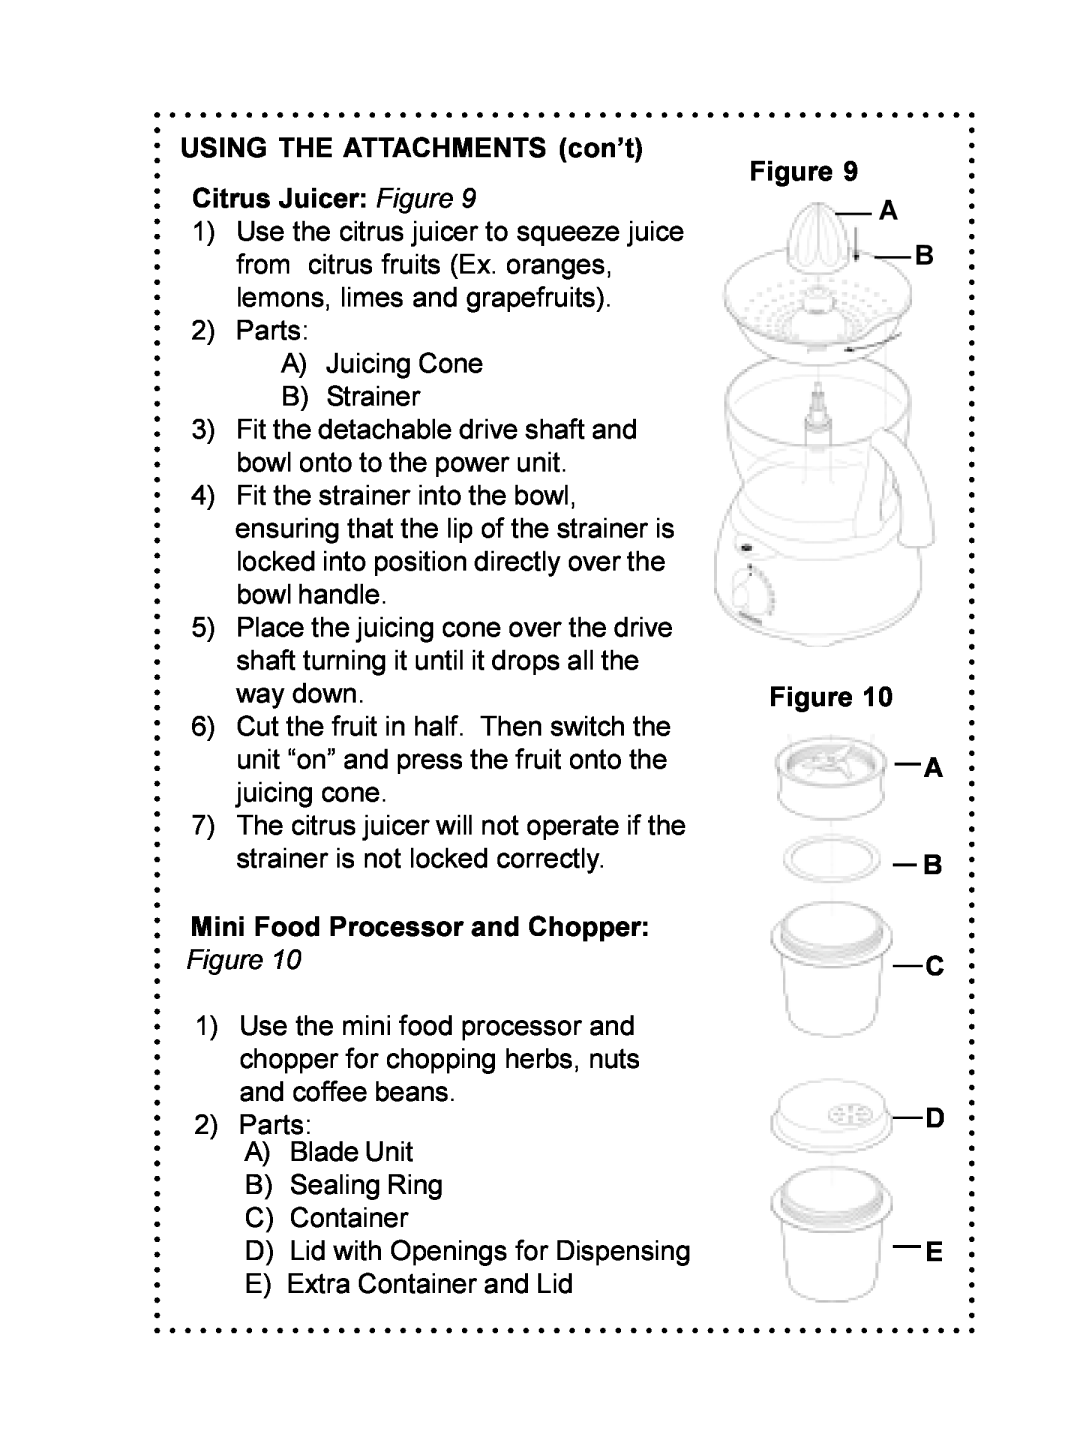 DeLonghi DFP690 Series instruction manual USING THE ATTACHMENTS con’t Citrus Juicer Figure, Mini Food Processor and Chopper 